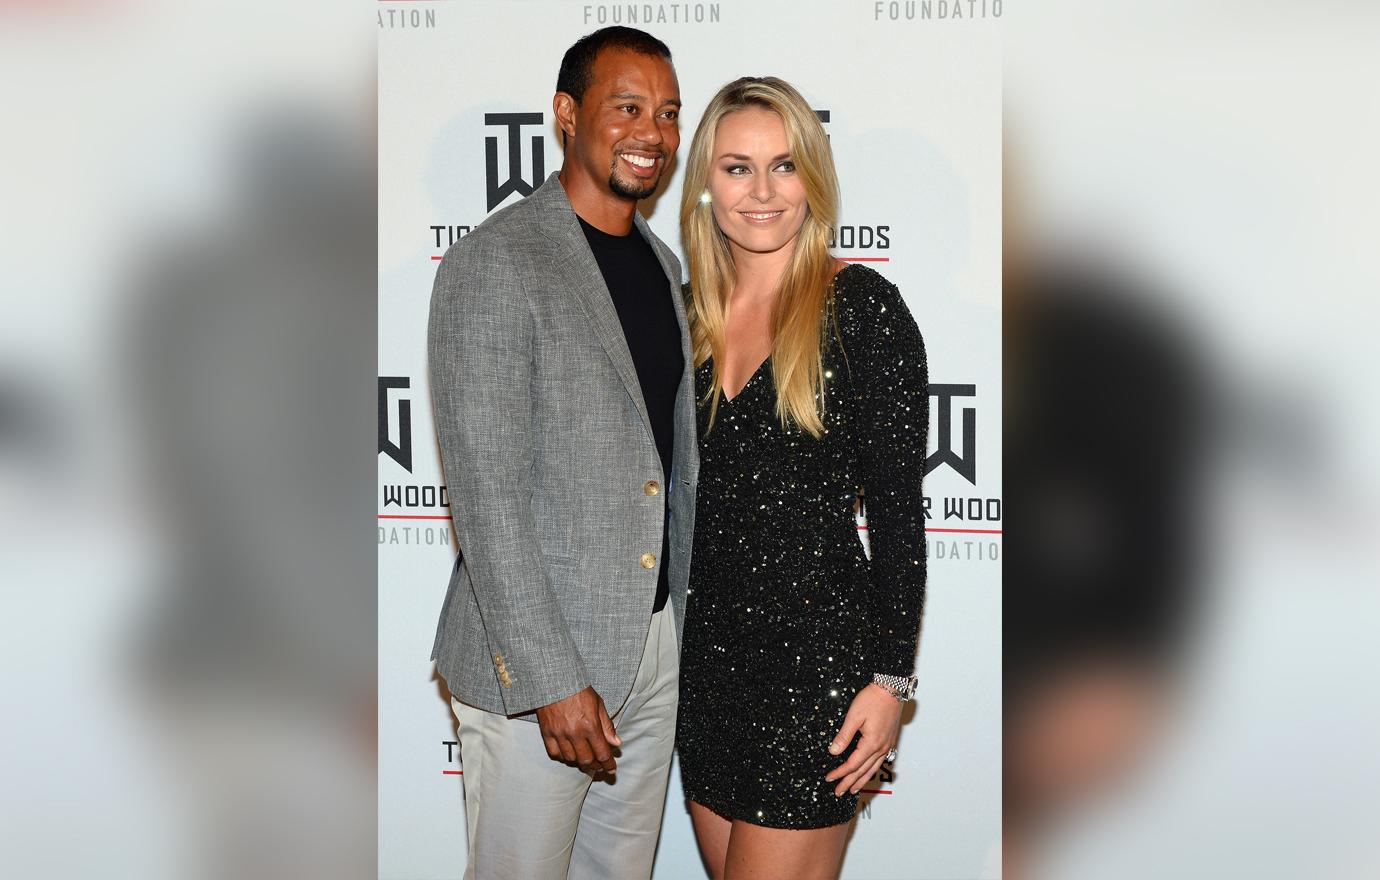 Tiger Woods New Girlfriend Dark Past Exposed! pic